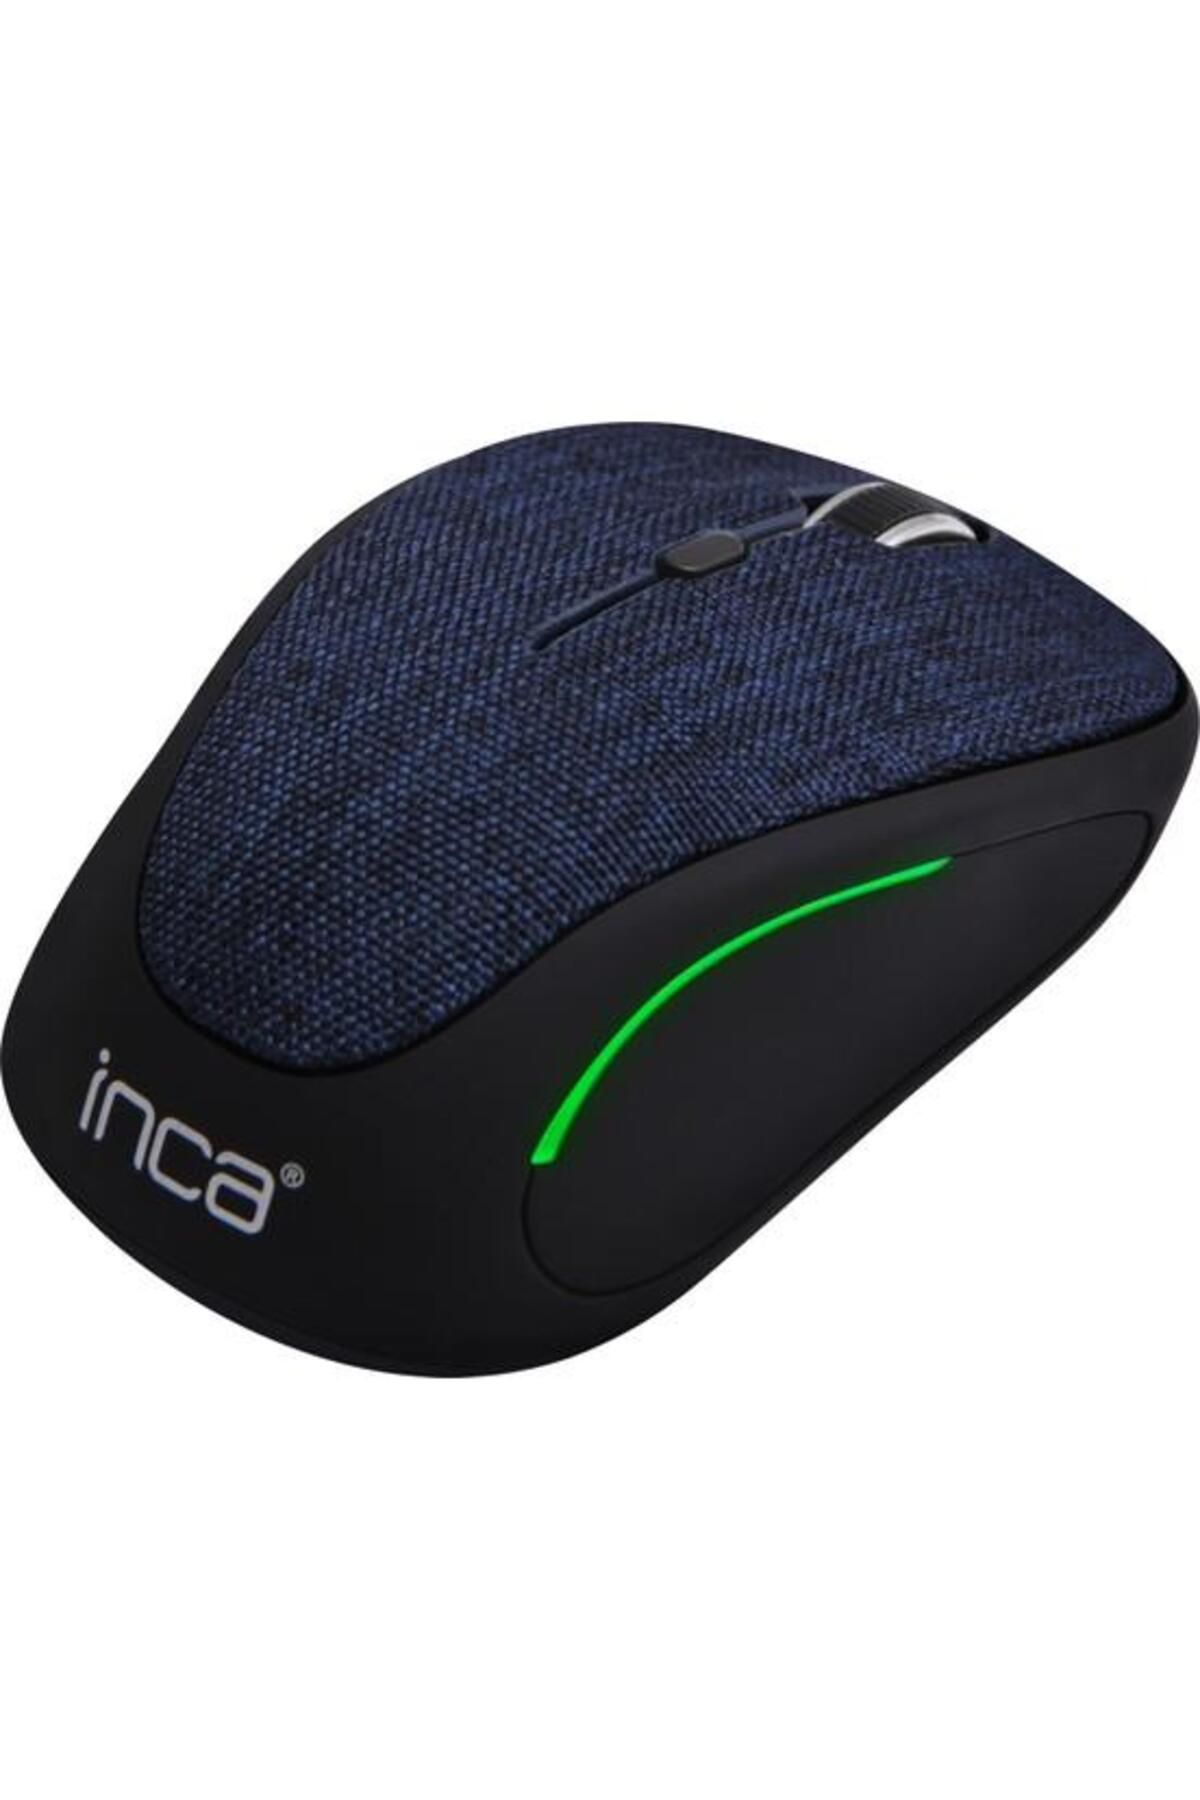 Inca Iwm-300rl Kumaş Yüzey 7 Led Wireless Mouse